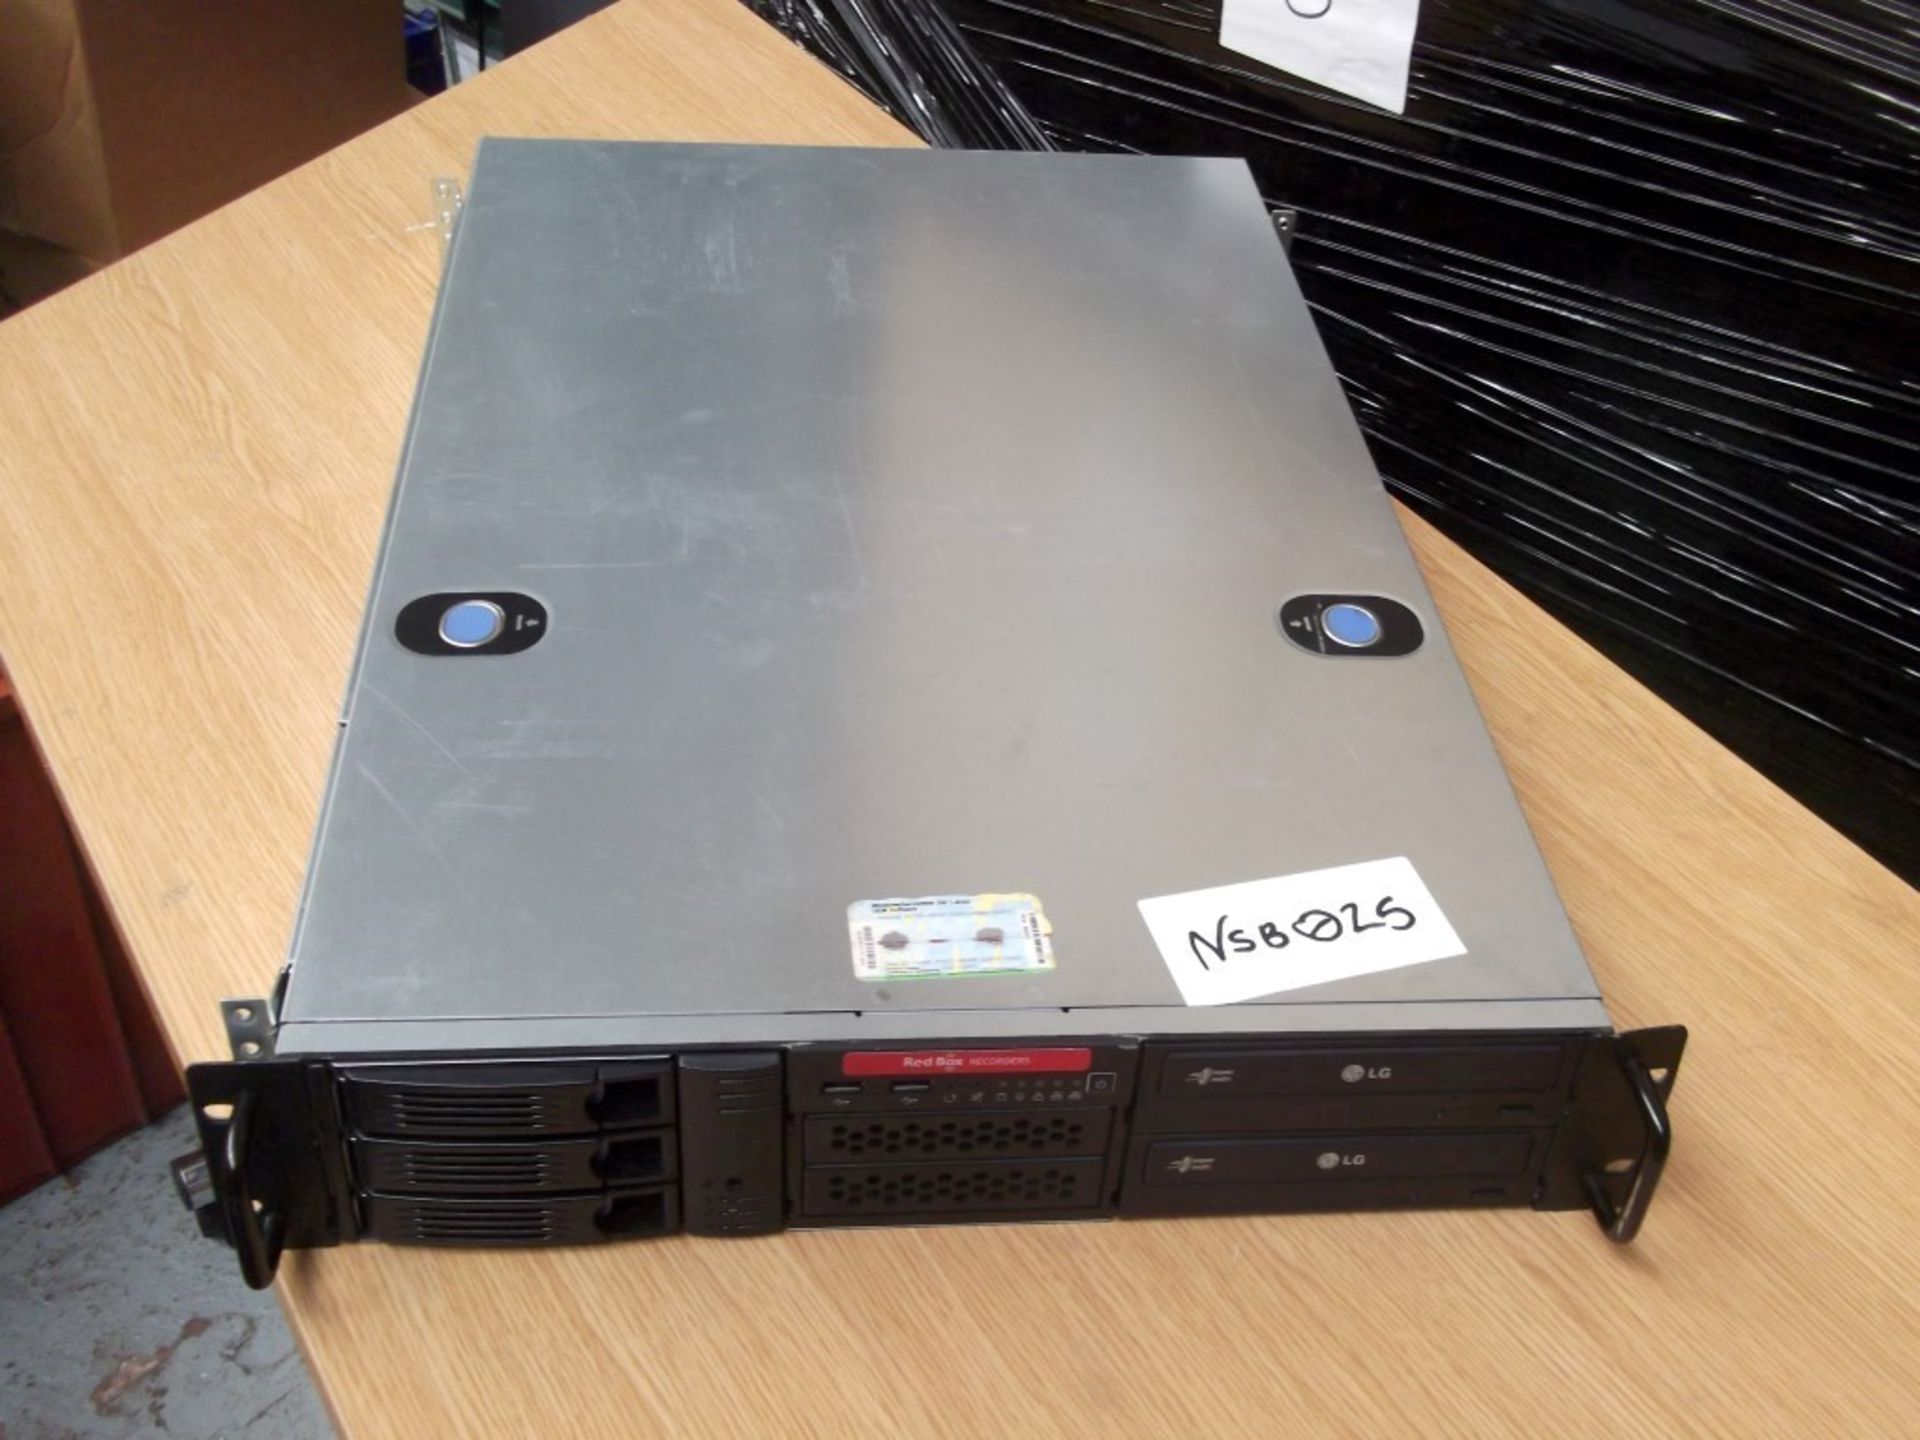 1 x Redbox Recorder - Enterprise IPT / Voice Recording Rackmount Server - Model RBR 2620 - Core 2